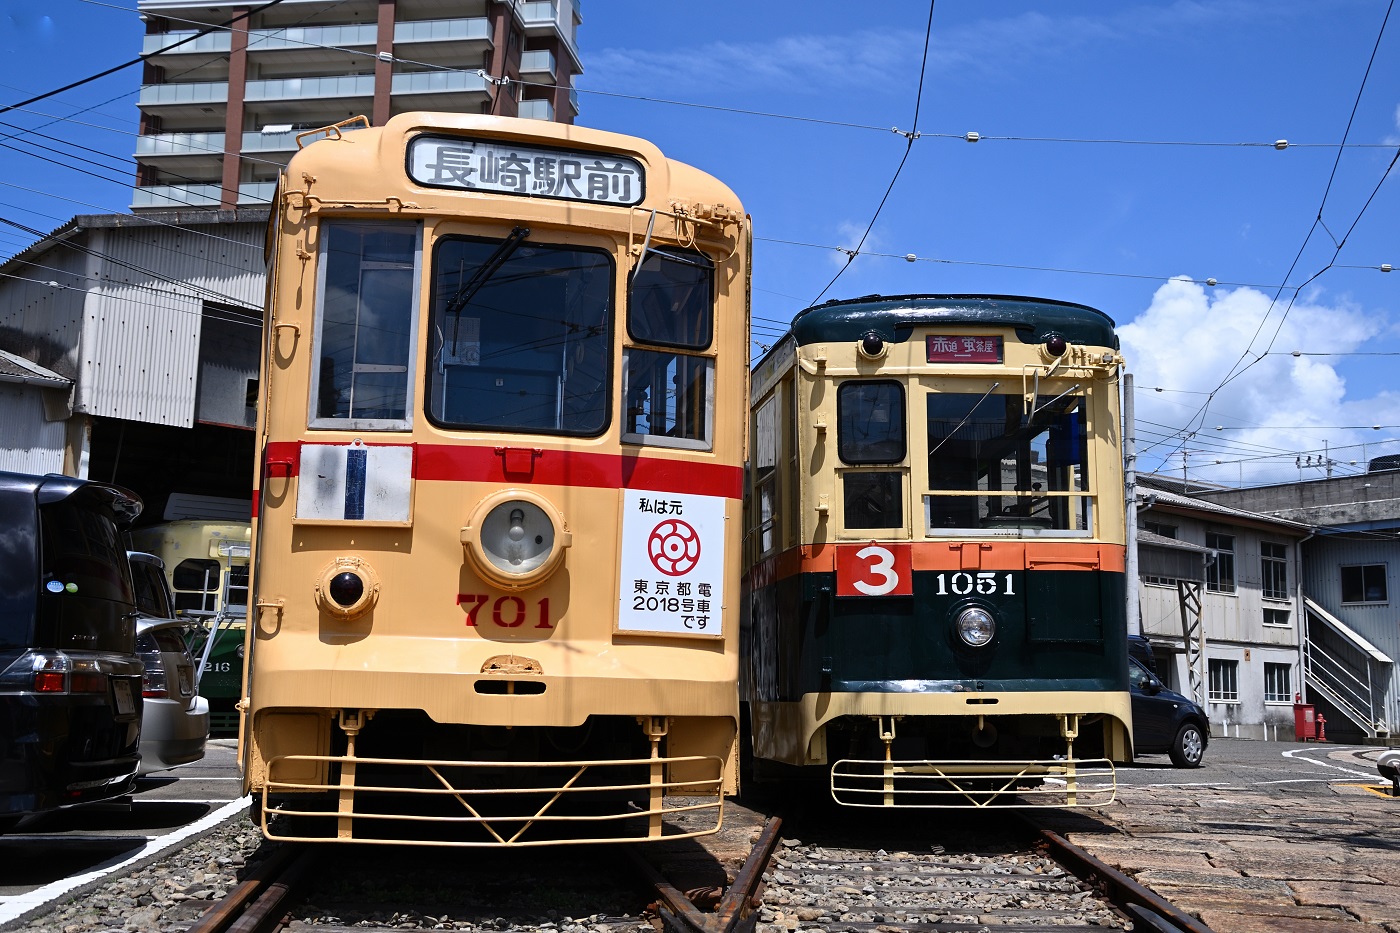 Нагасаки, Naniwa Kōki № 701; Нагасаки, Niigata Engineering № 1051; Нагасаки — Трамвайное депо Urakami